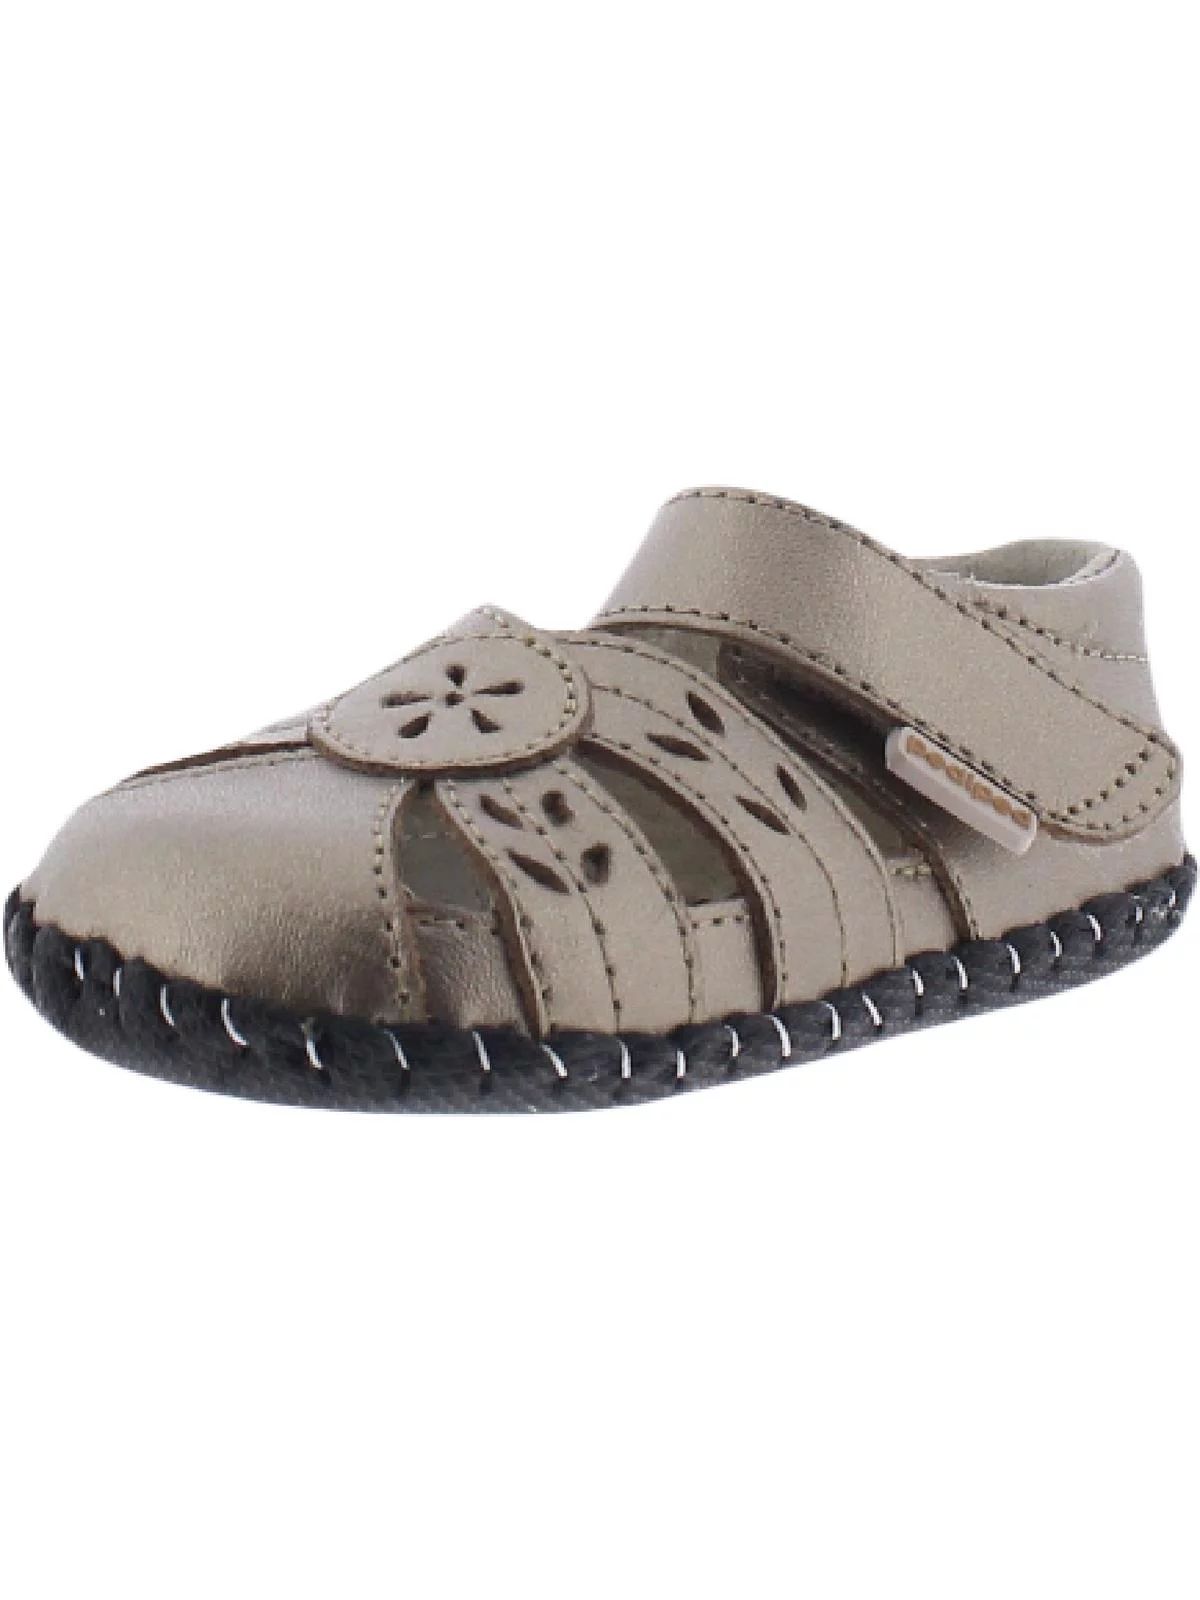 Pediped Daphne Infant Metallic Sandals Shoes | Walmart (US)